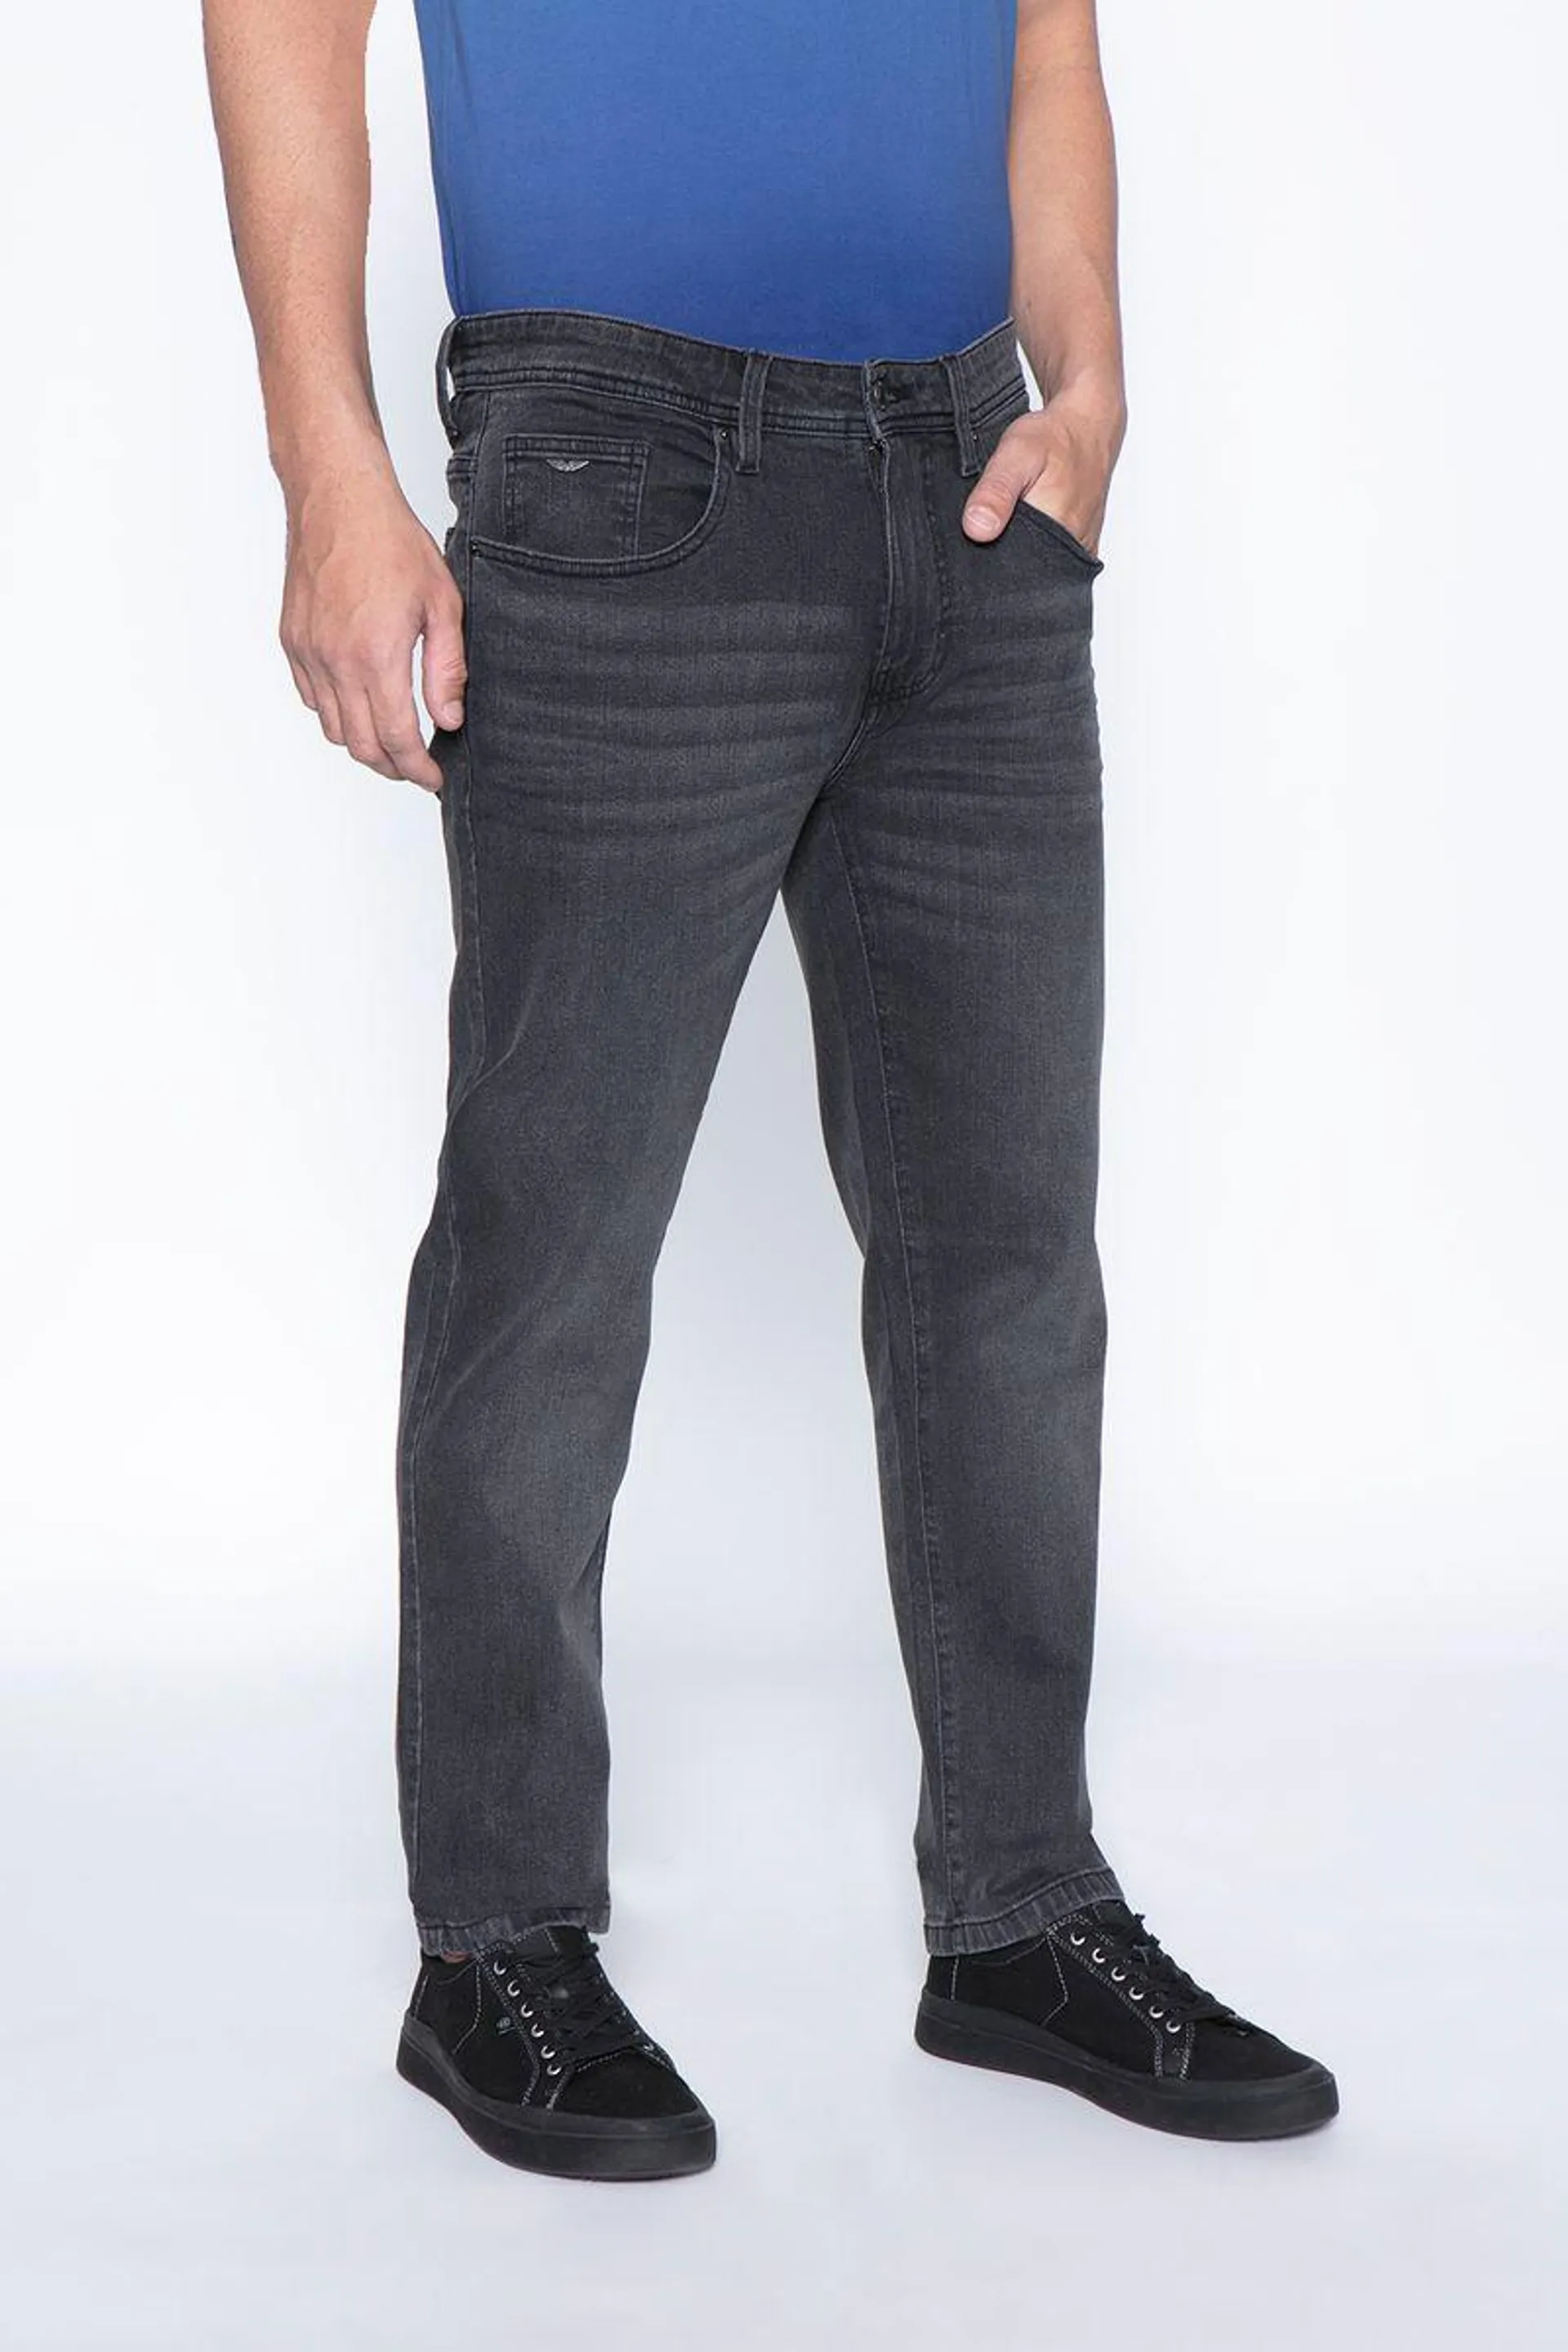 Jeans Bristol Básico Fj Grey